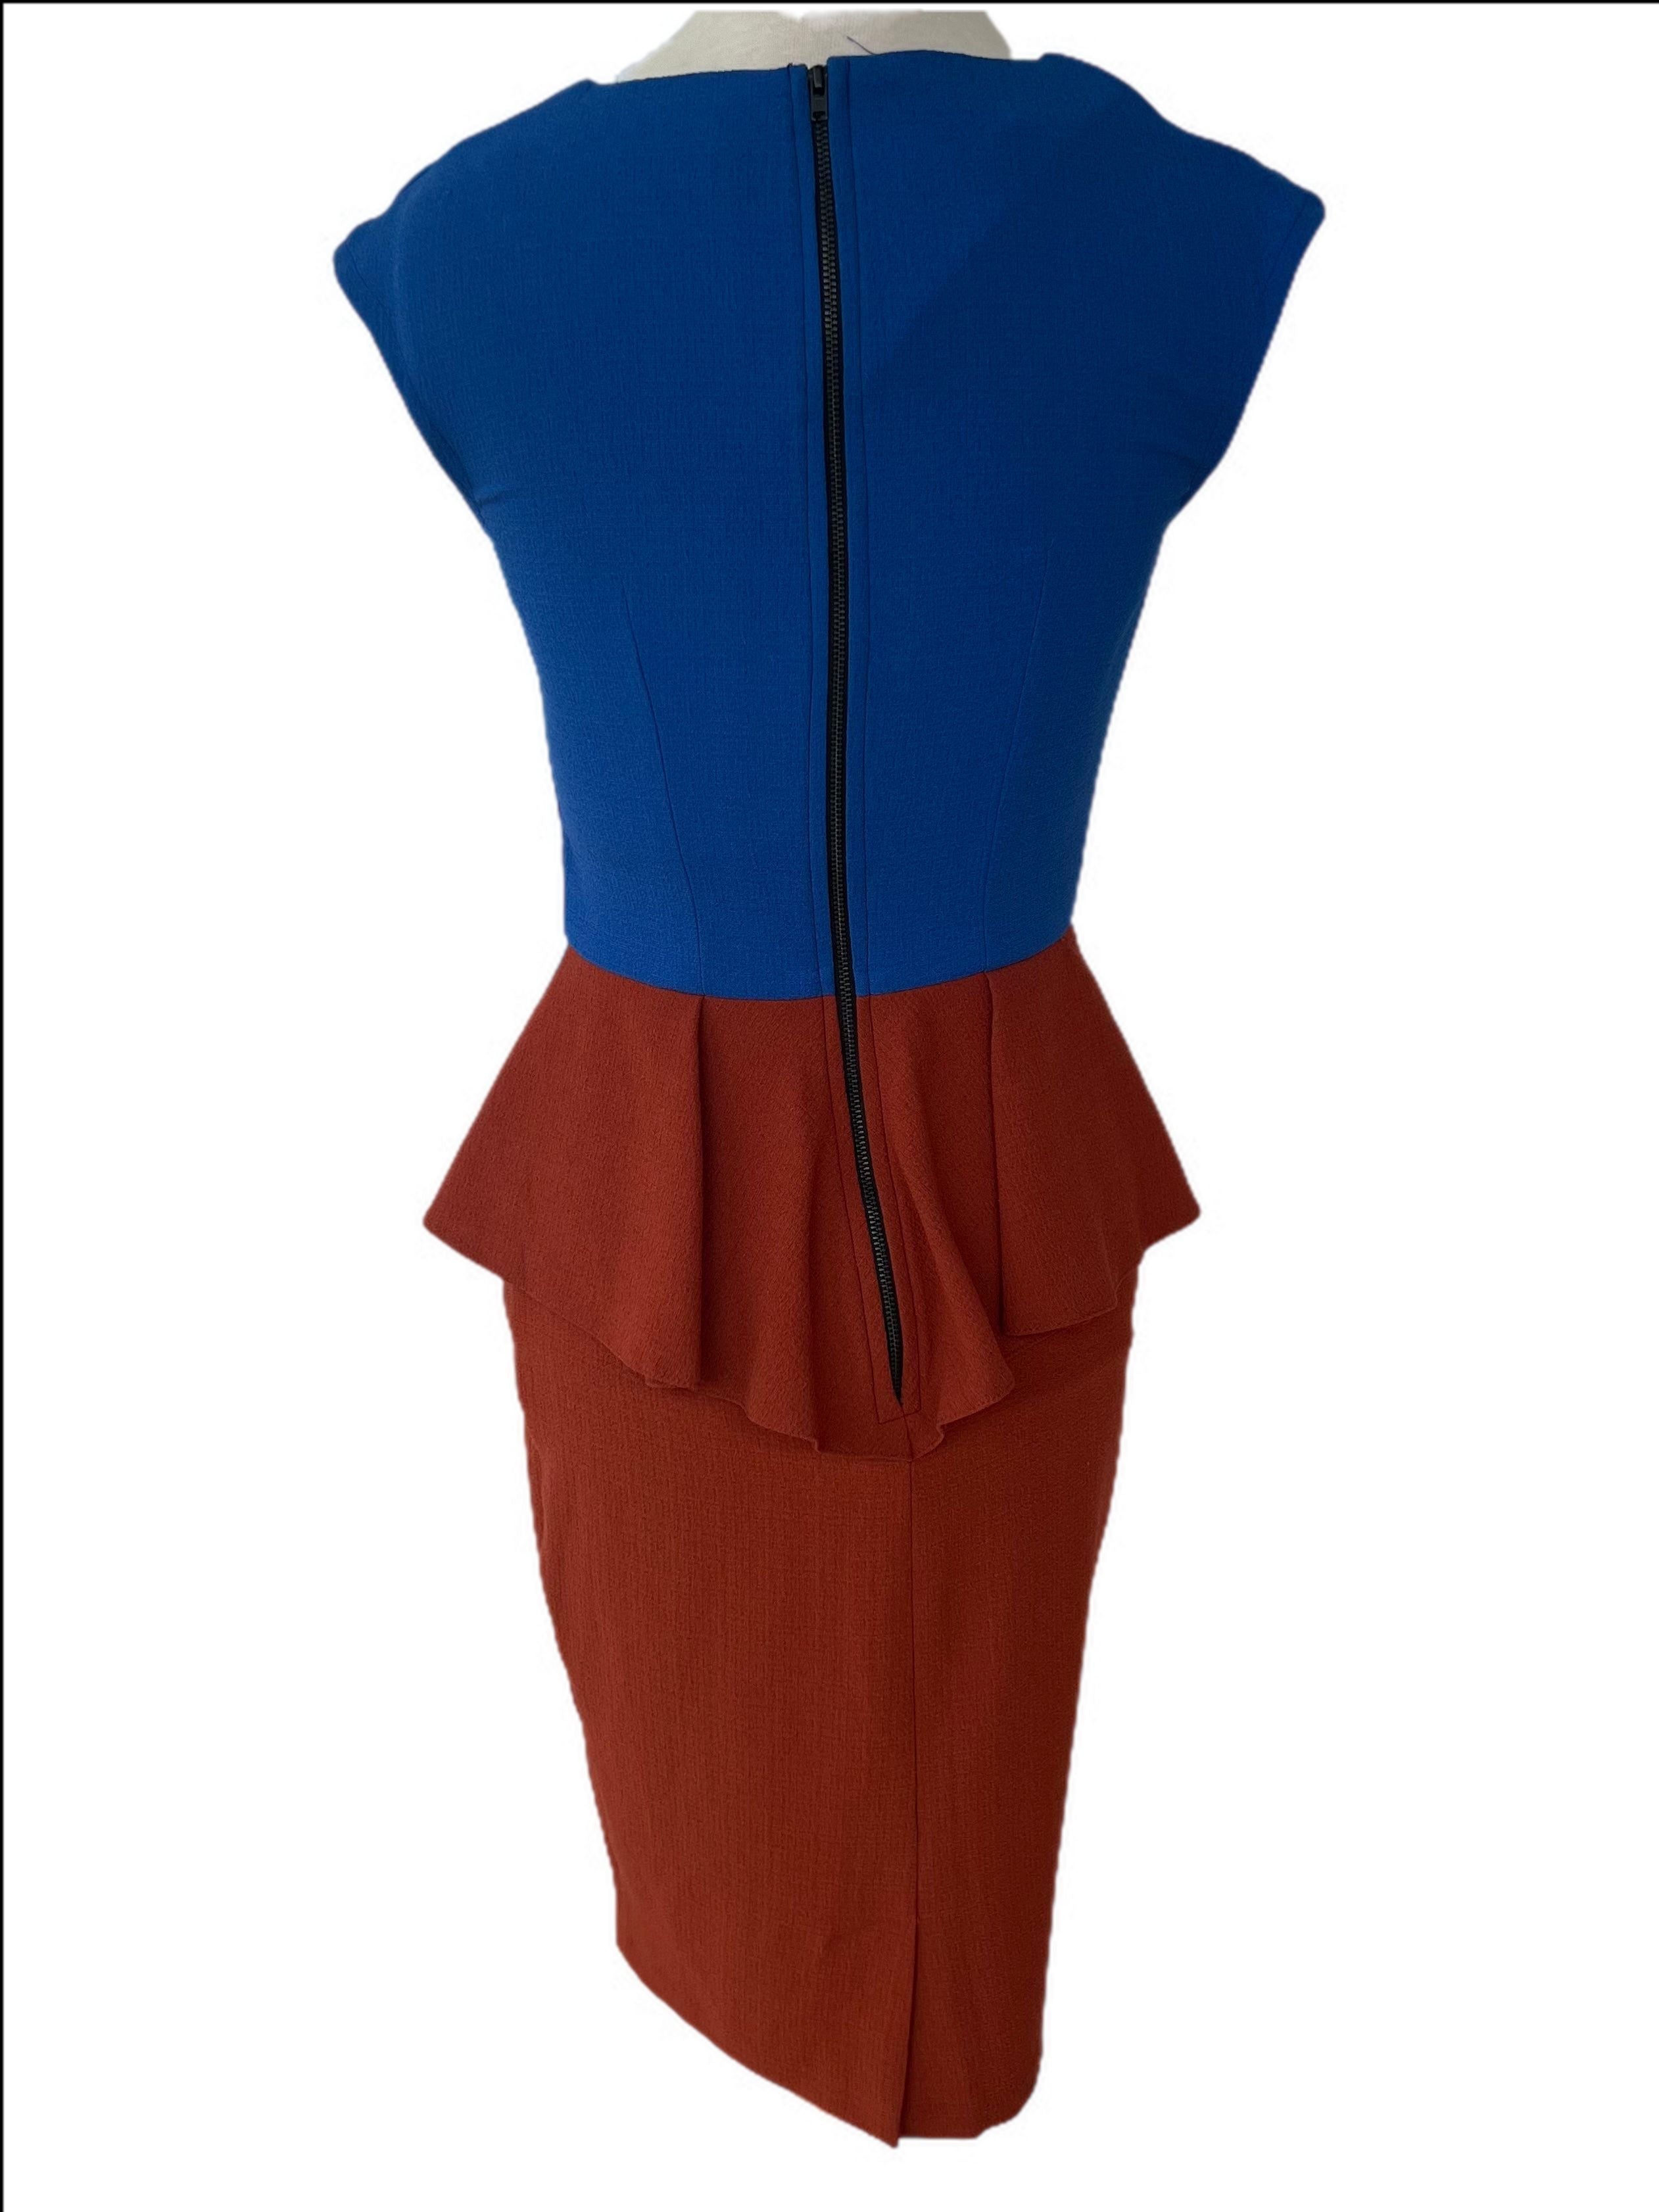 Sleeveless Dress with Keyhole Cutout and Peplum Skirt